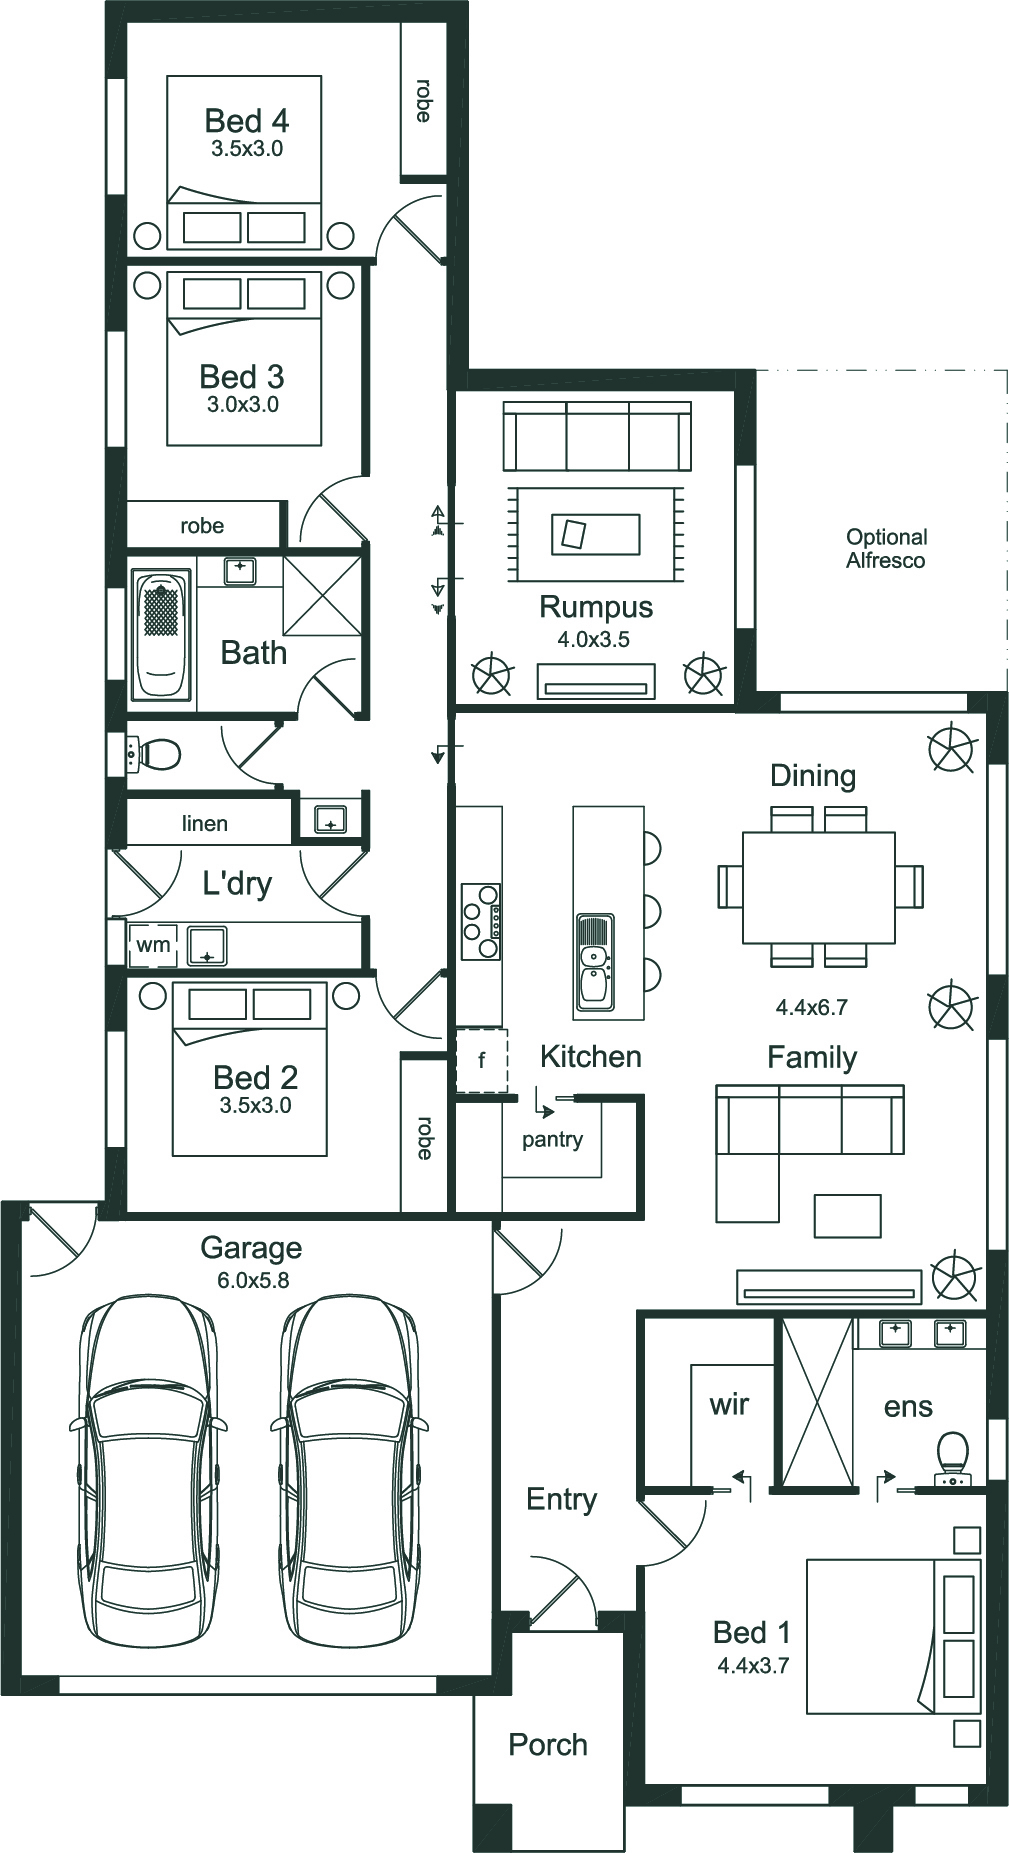 The Maxwell floor plan image